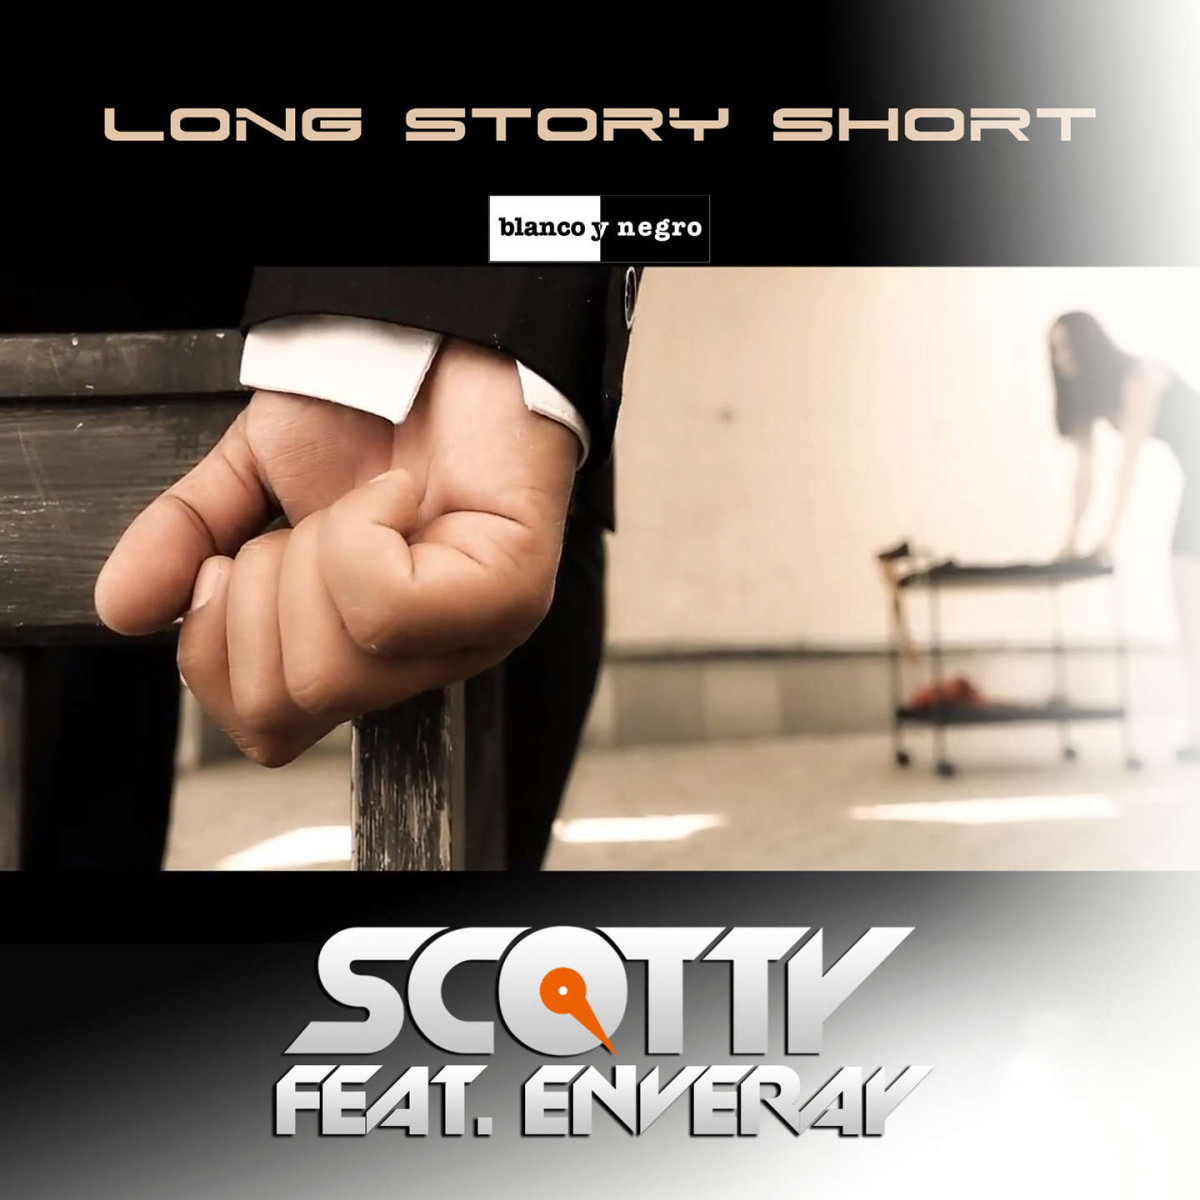 Scotty feat. Enveray - Long Story Short (Bodybangers Remix Edit) (2014)